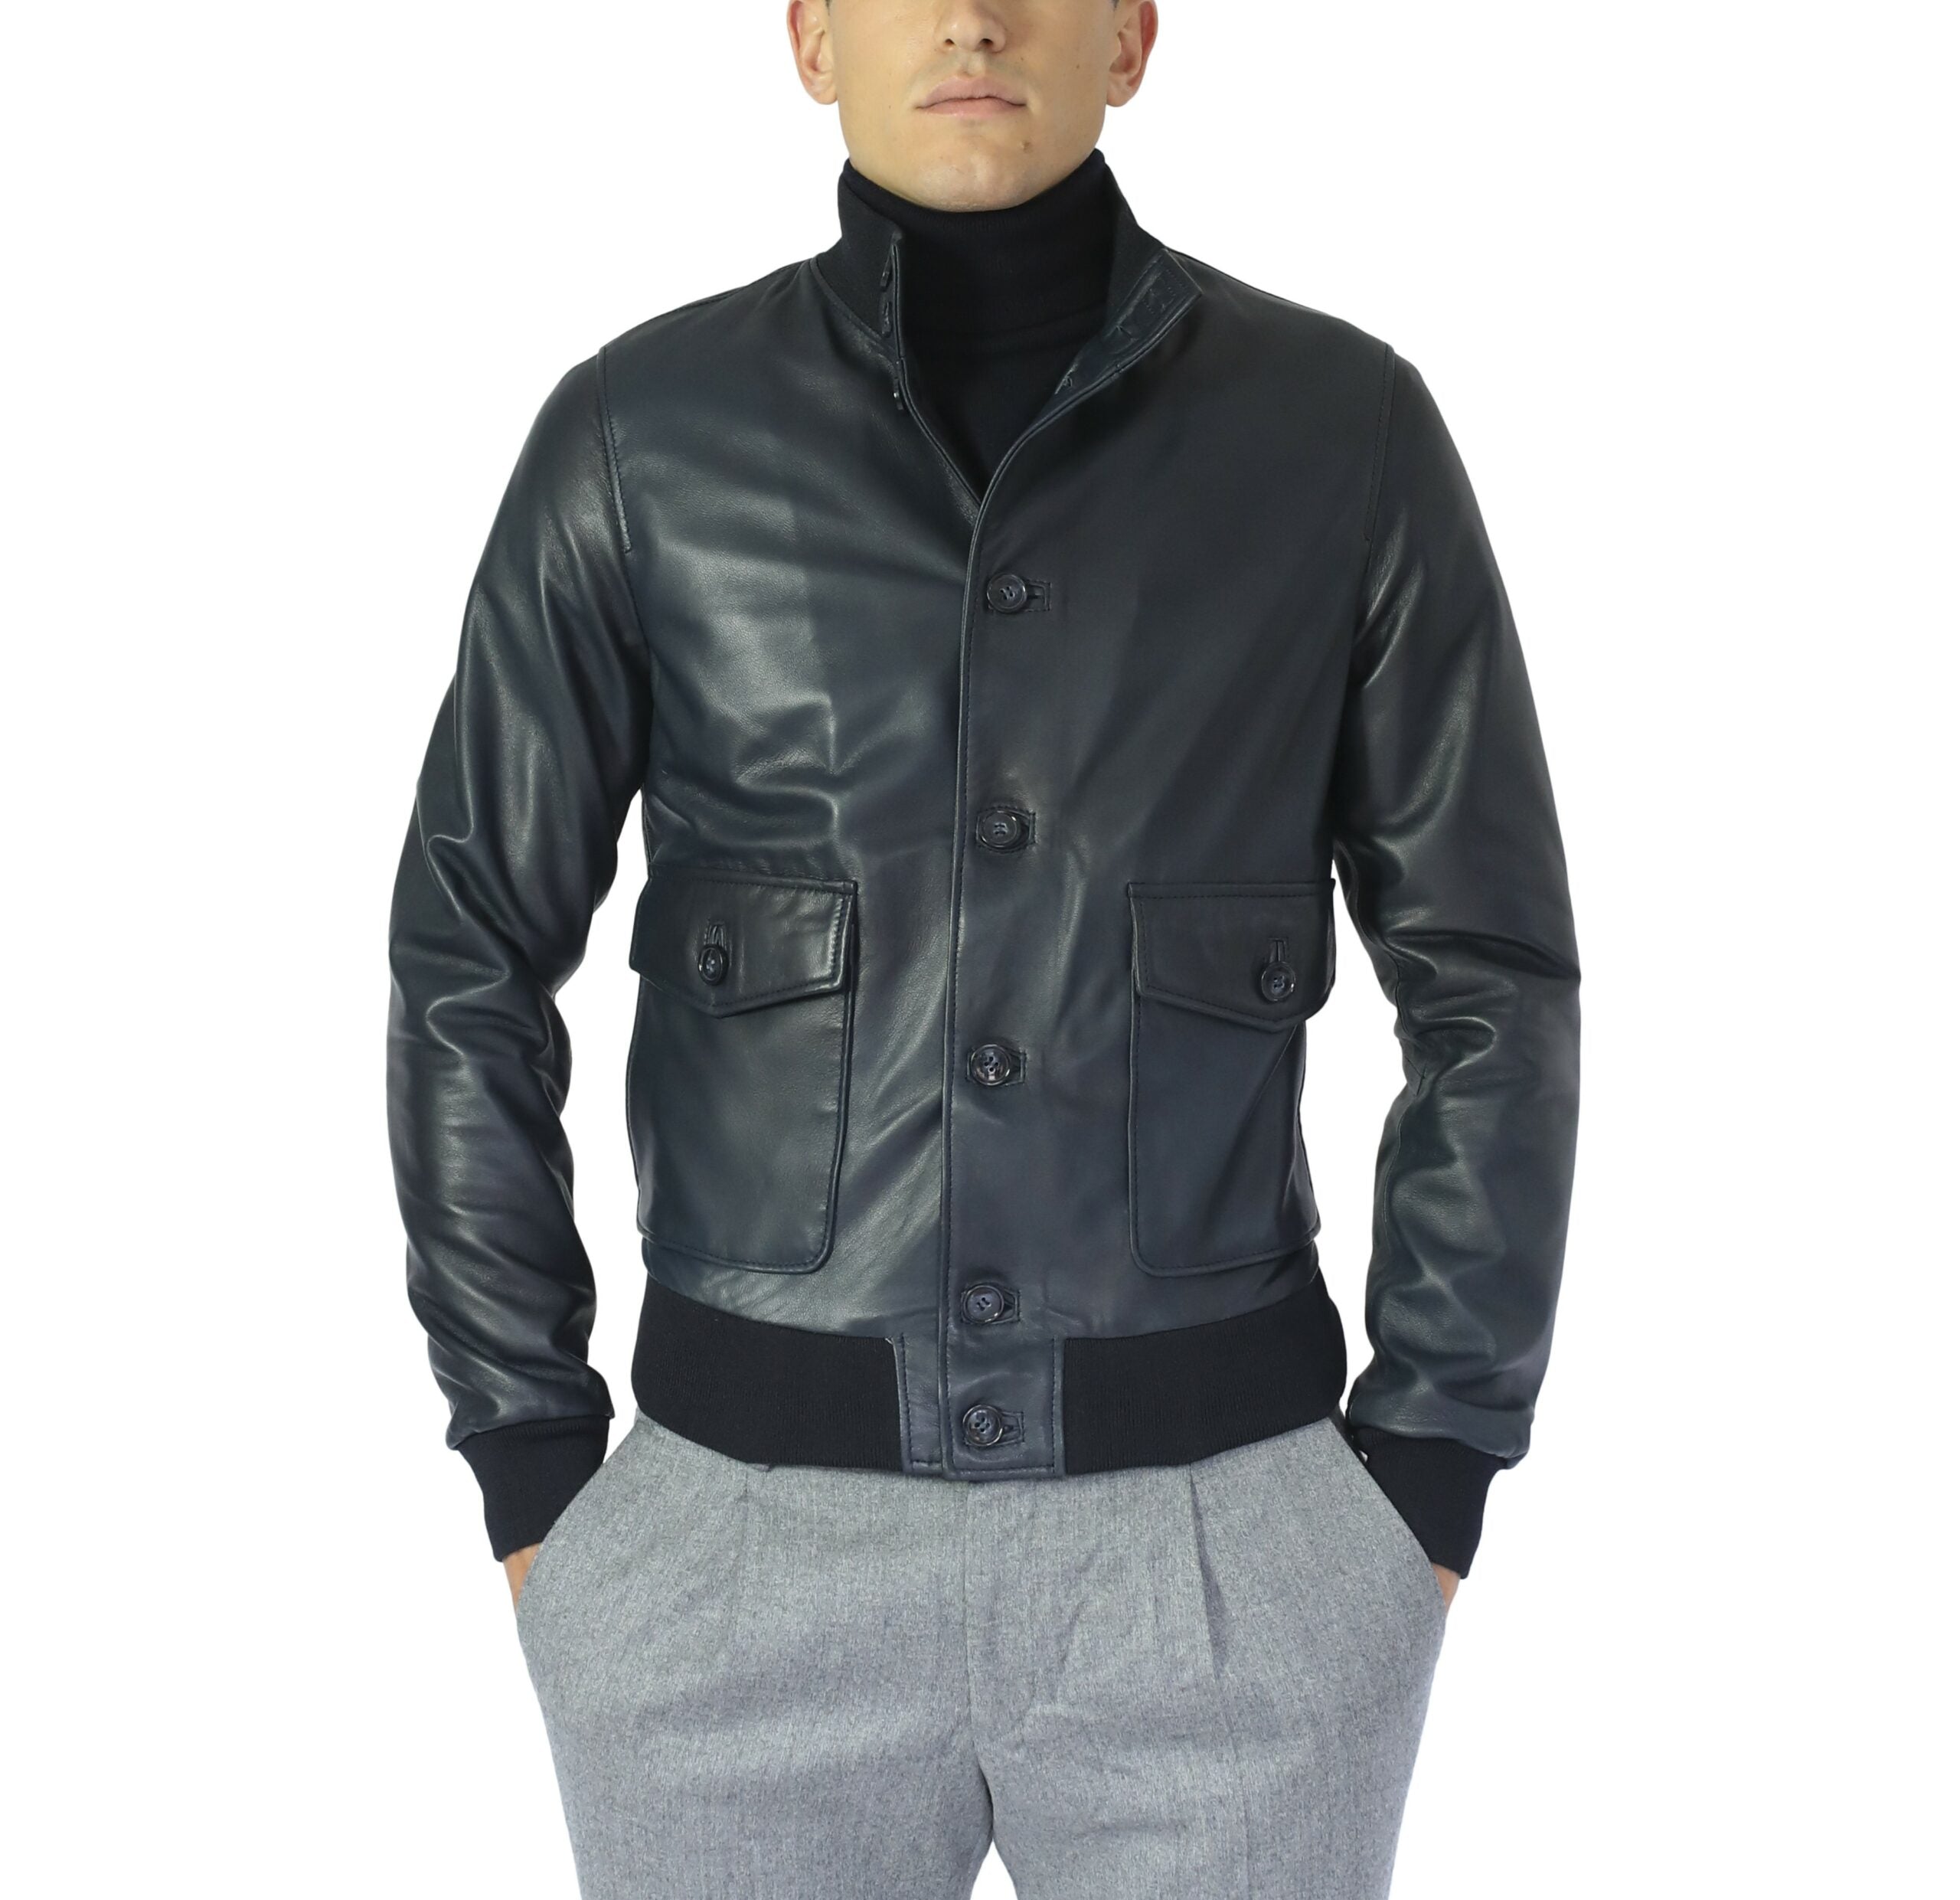 98LNABL leather jacket